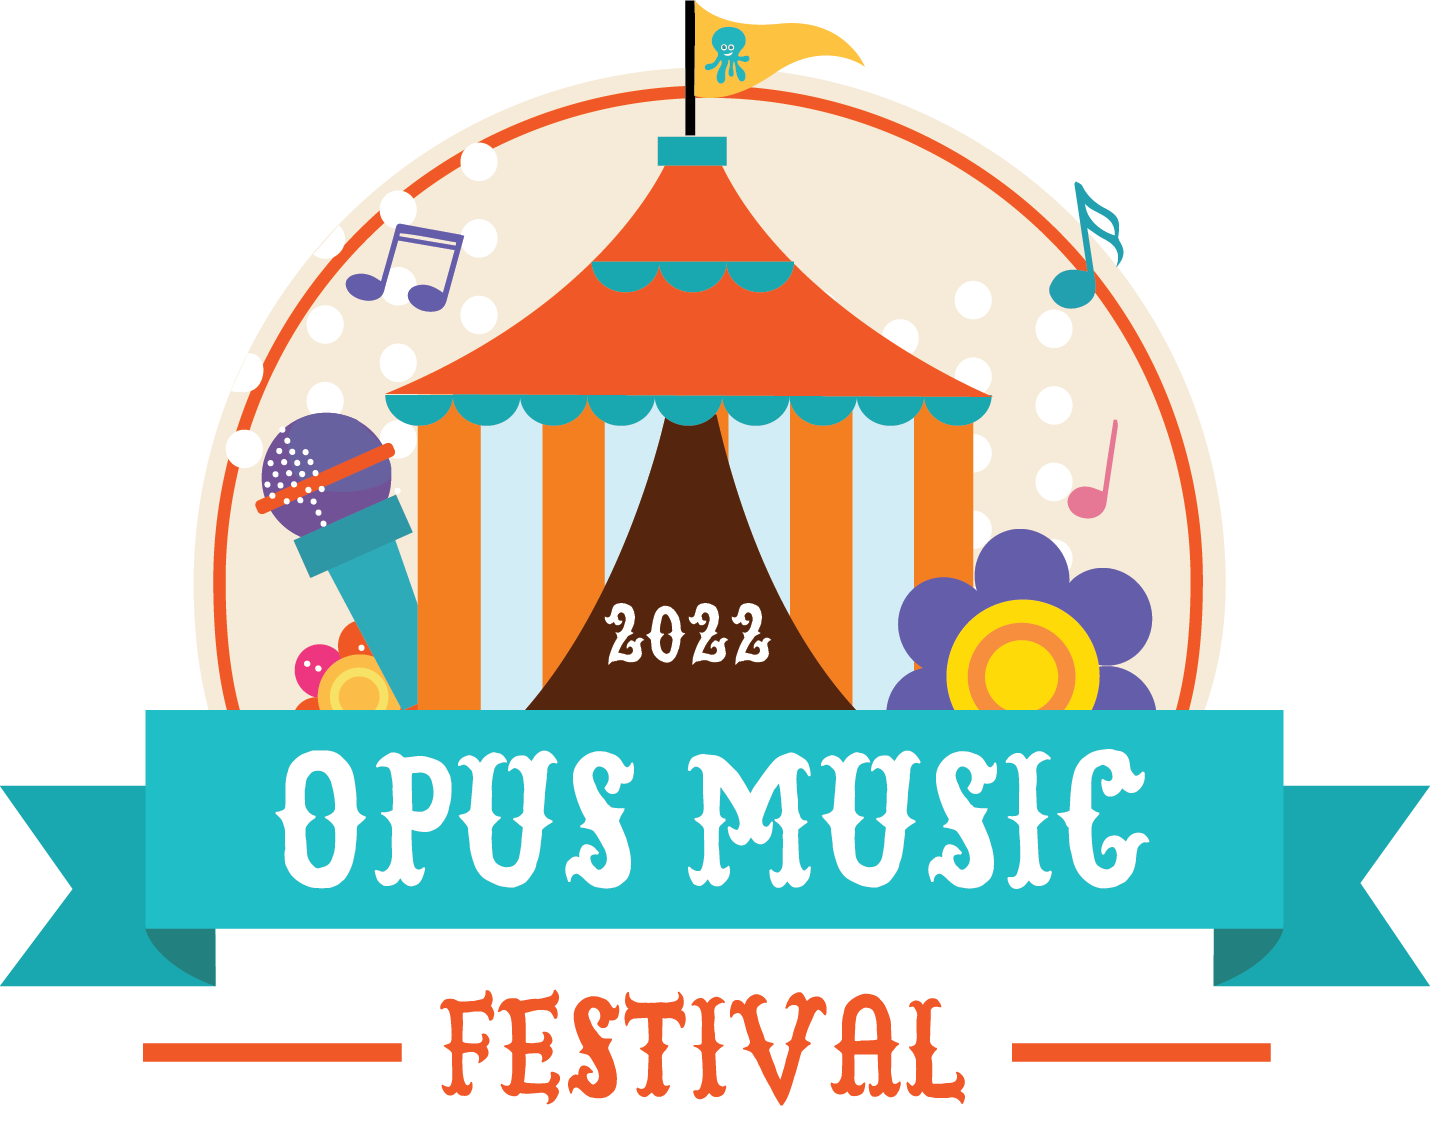 Opus Music Festival